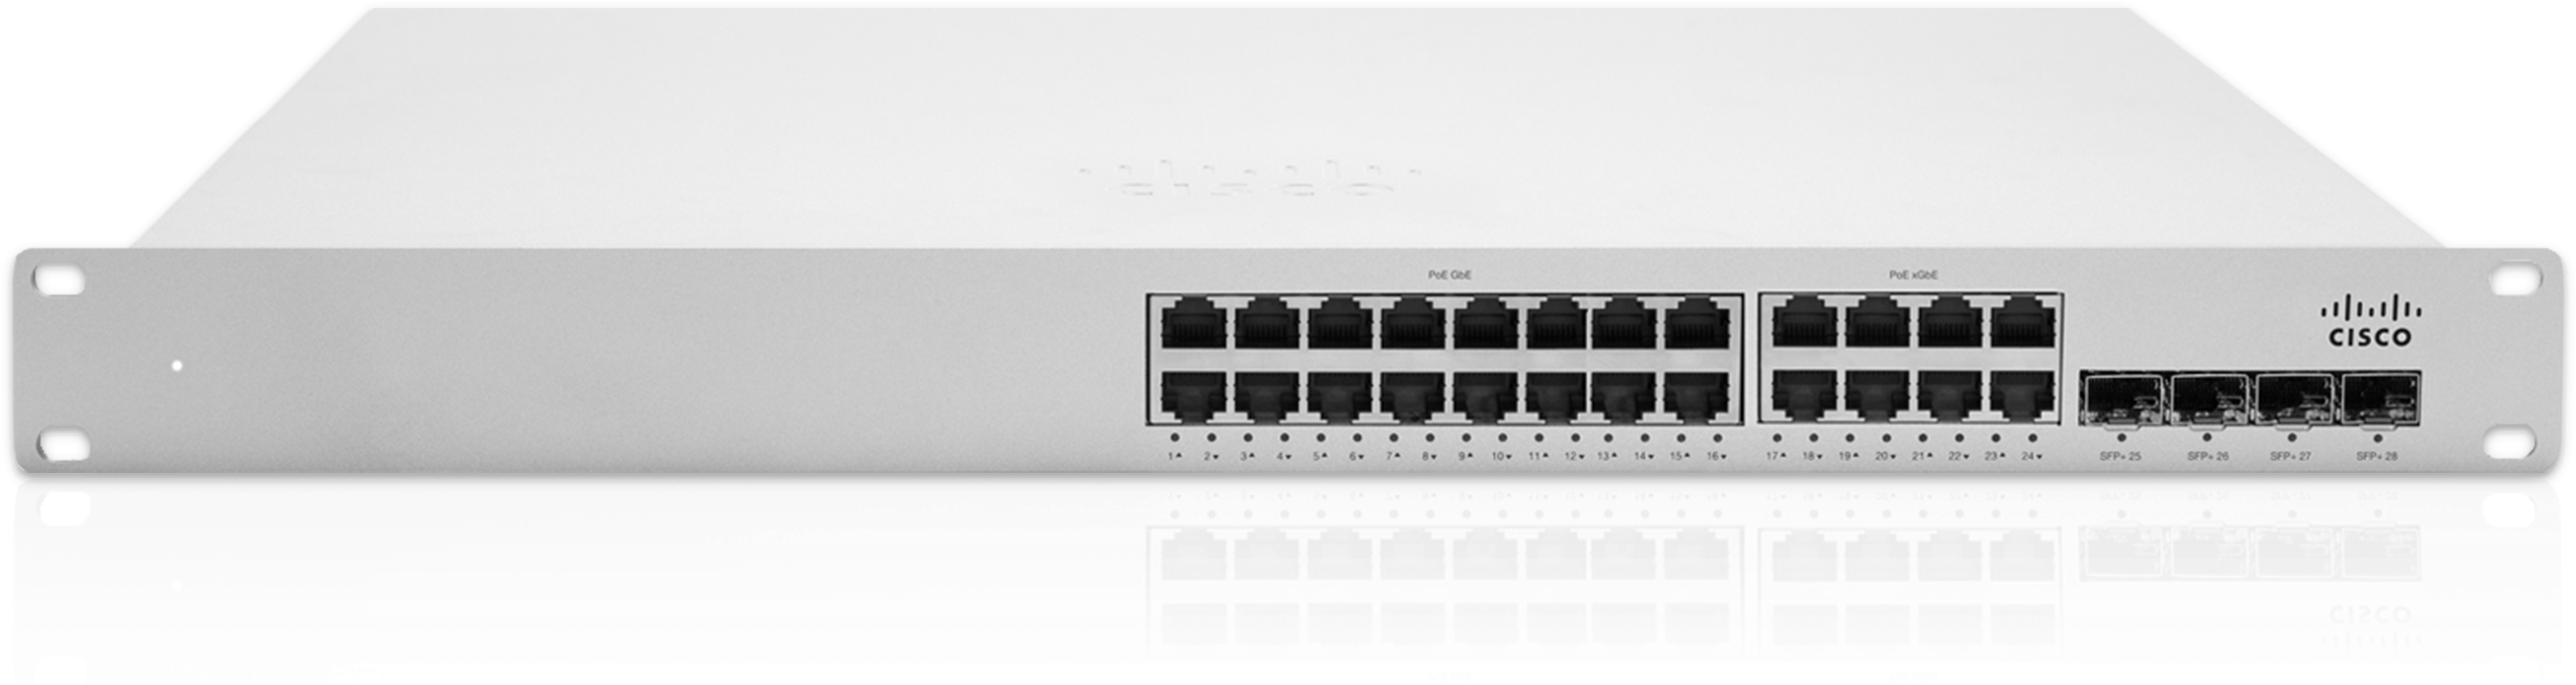 Cisco Meraki Router PNG Clipart Background